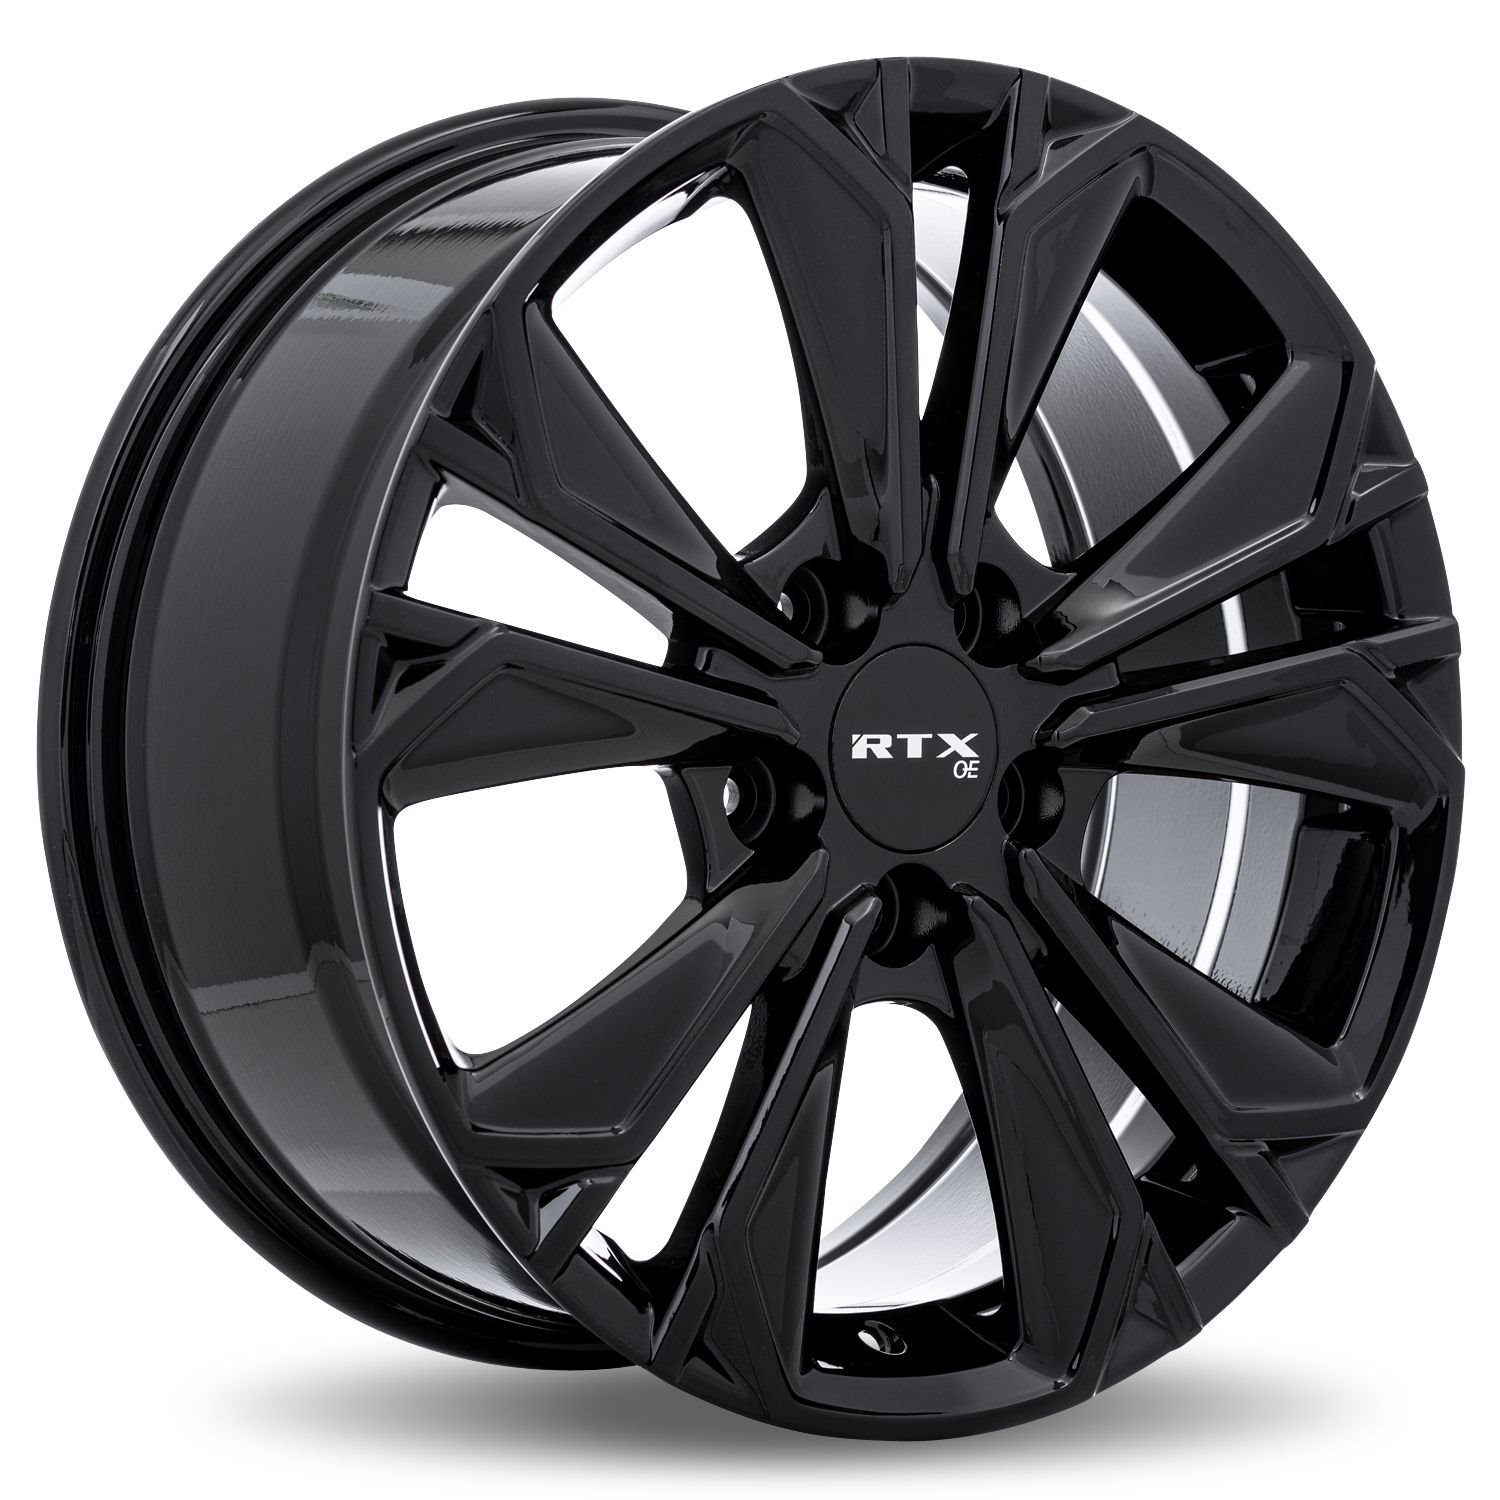 083186 OE-Series HD-01 Wheel [Size: 17" x 7.50"] Gloss Black Finish